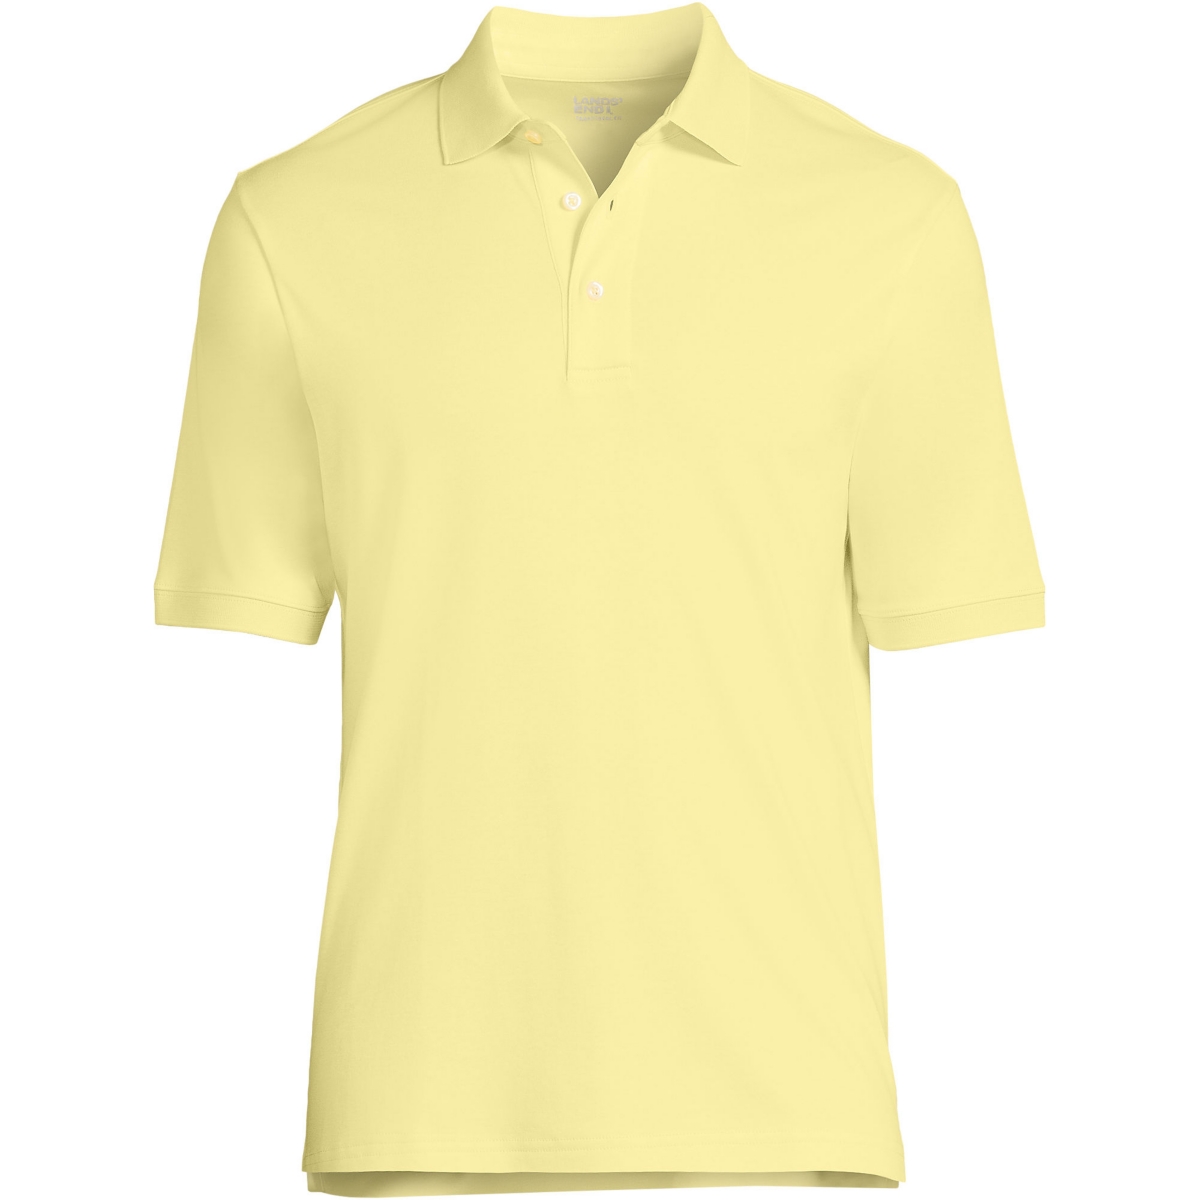 Men's Short Sleeve Cotton Supima Polo Shirt - Faint lemon